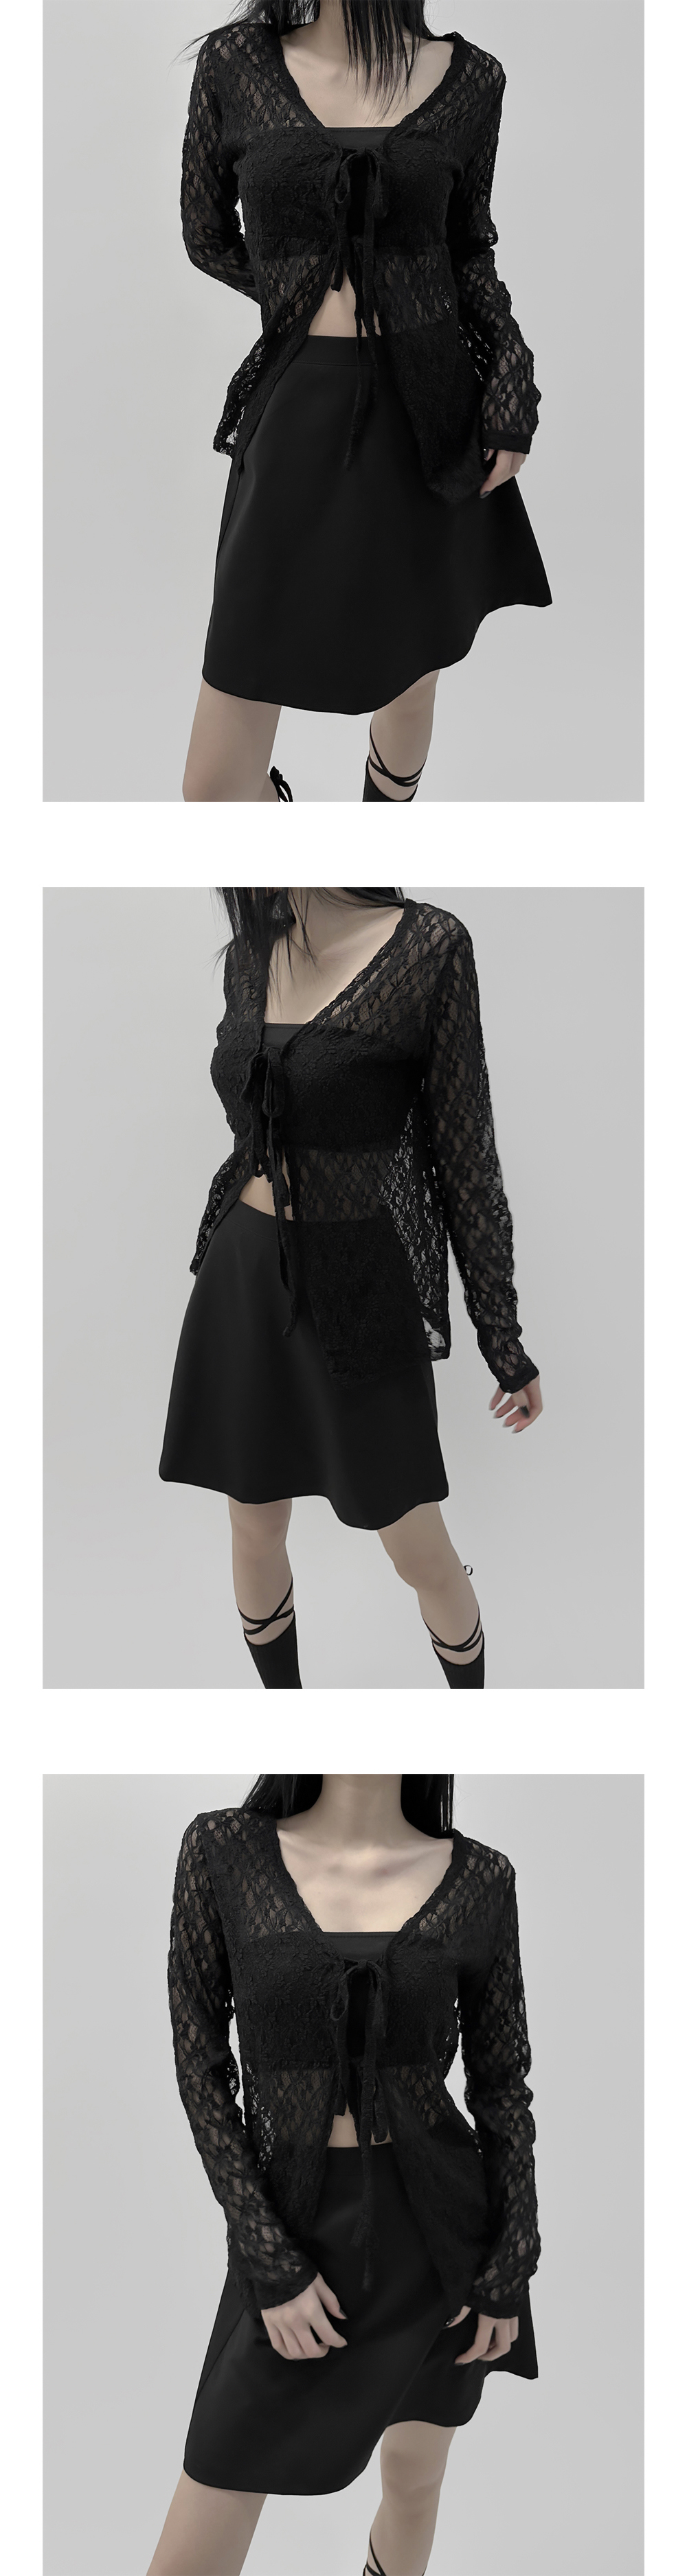 mini skirt model image-S1L3